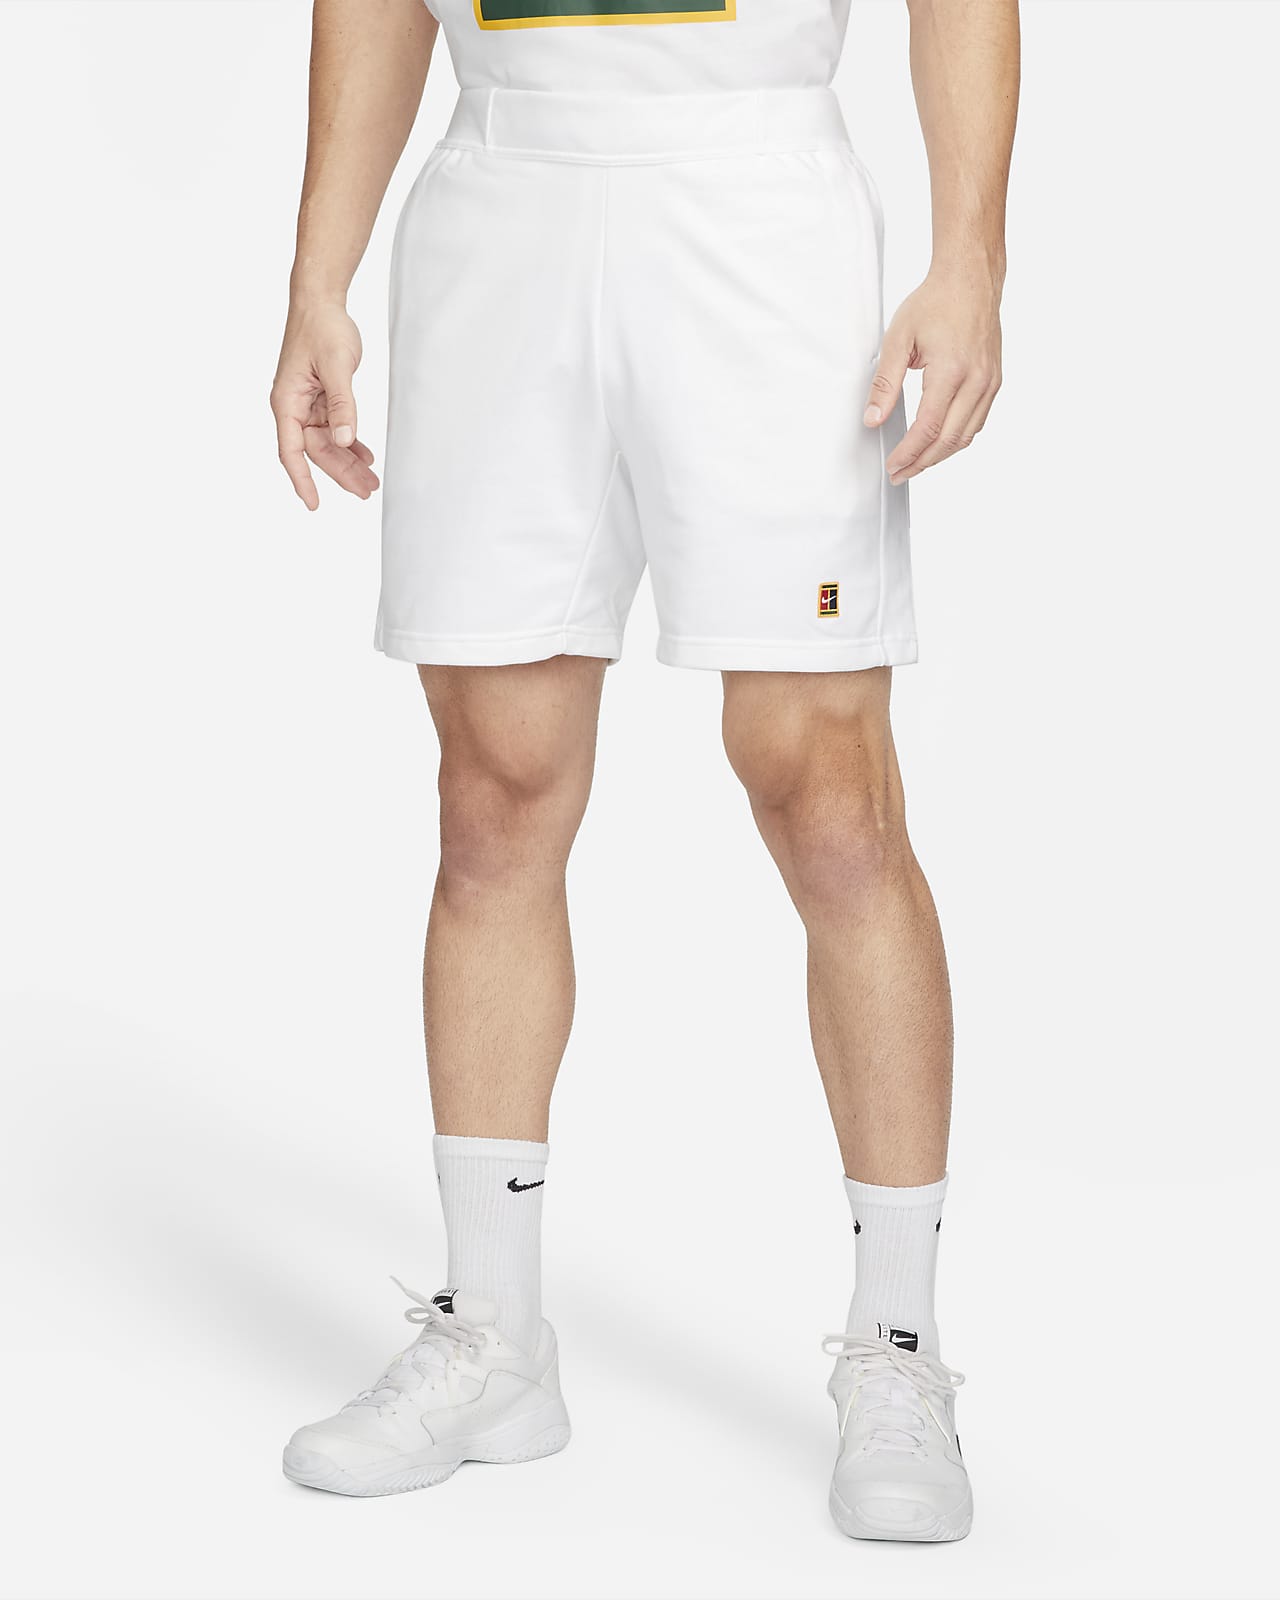 NikeCourt Men's Fleece Tennis Shorts